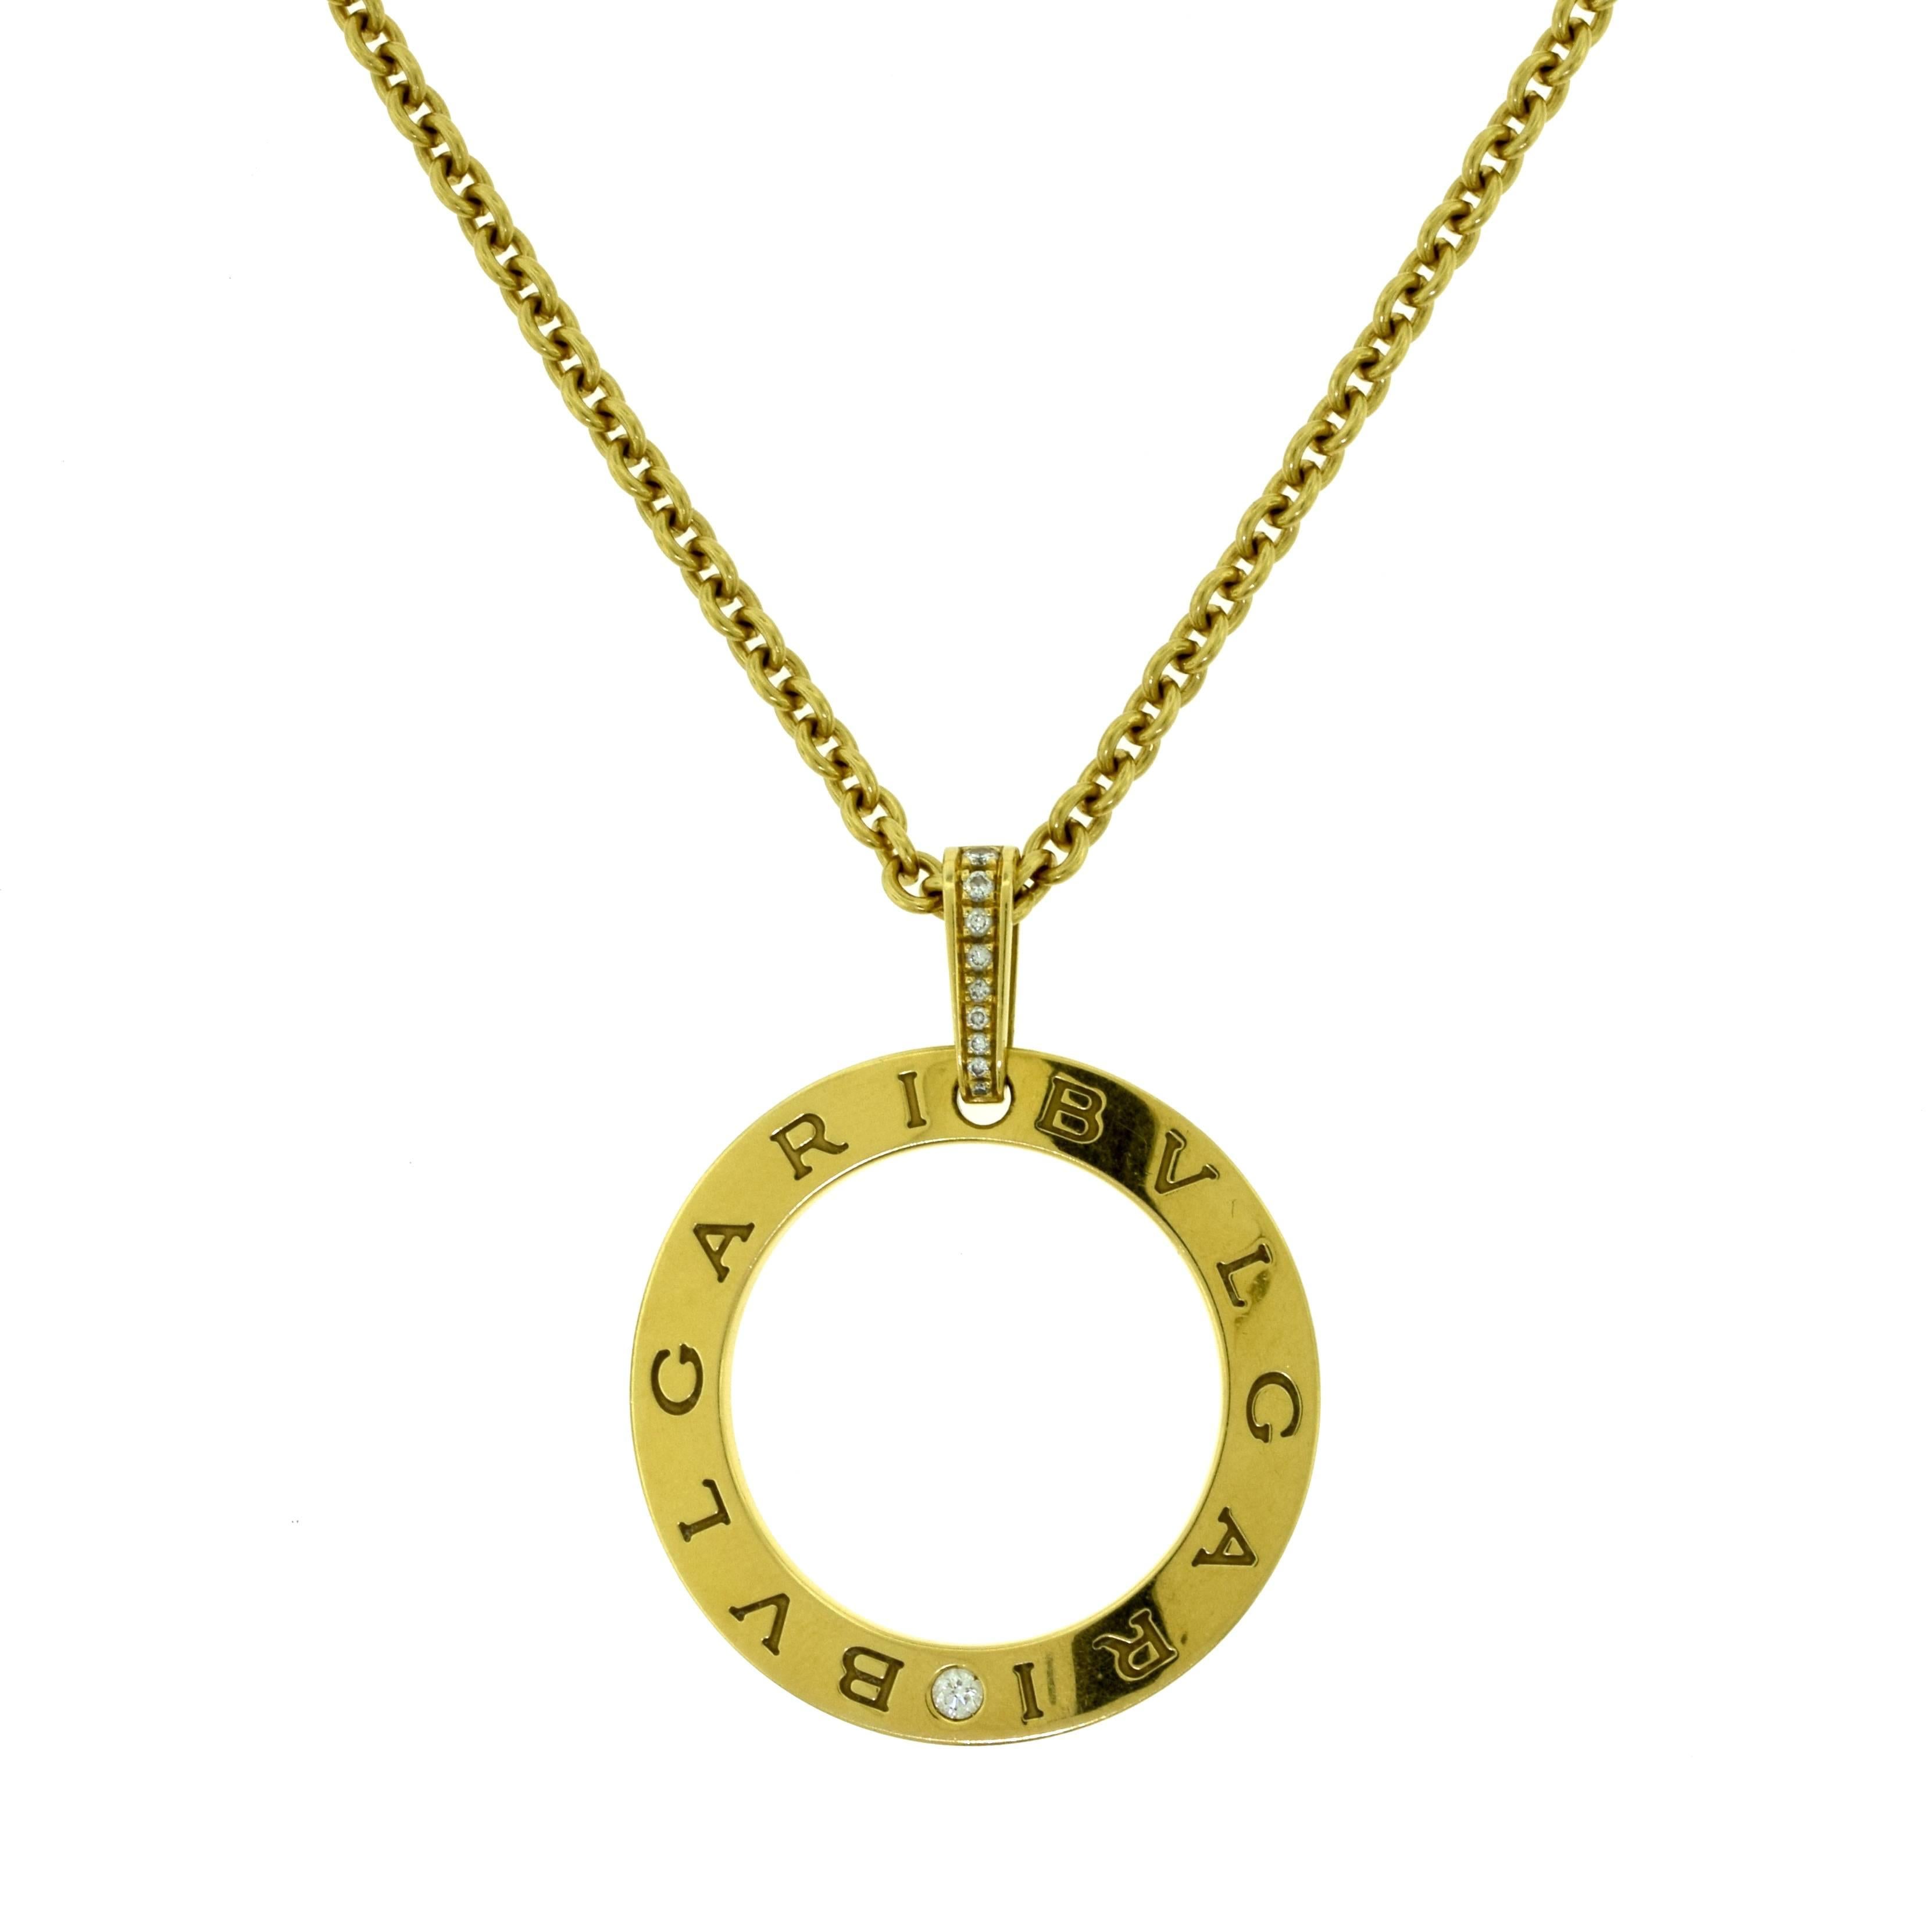 Bvlgari "Bvlgari Bvlgari" 18 Karat Yellow Gold Round Open Pendant Necklace For Sale